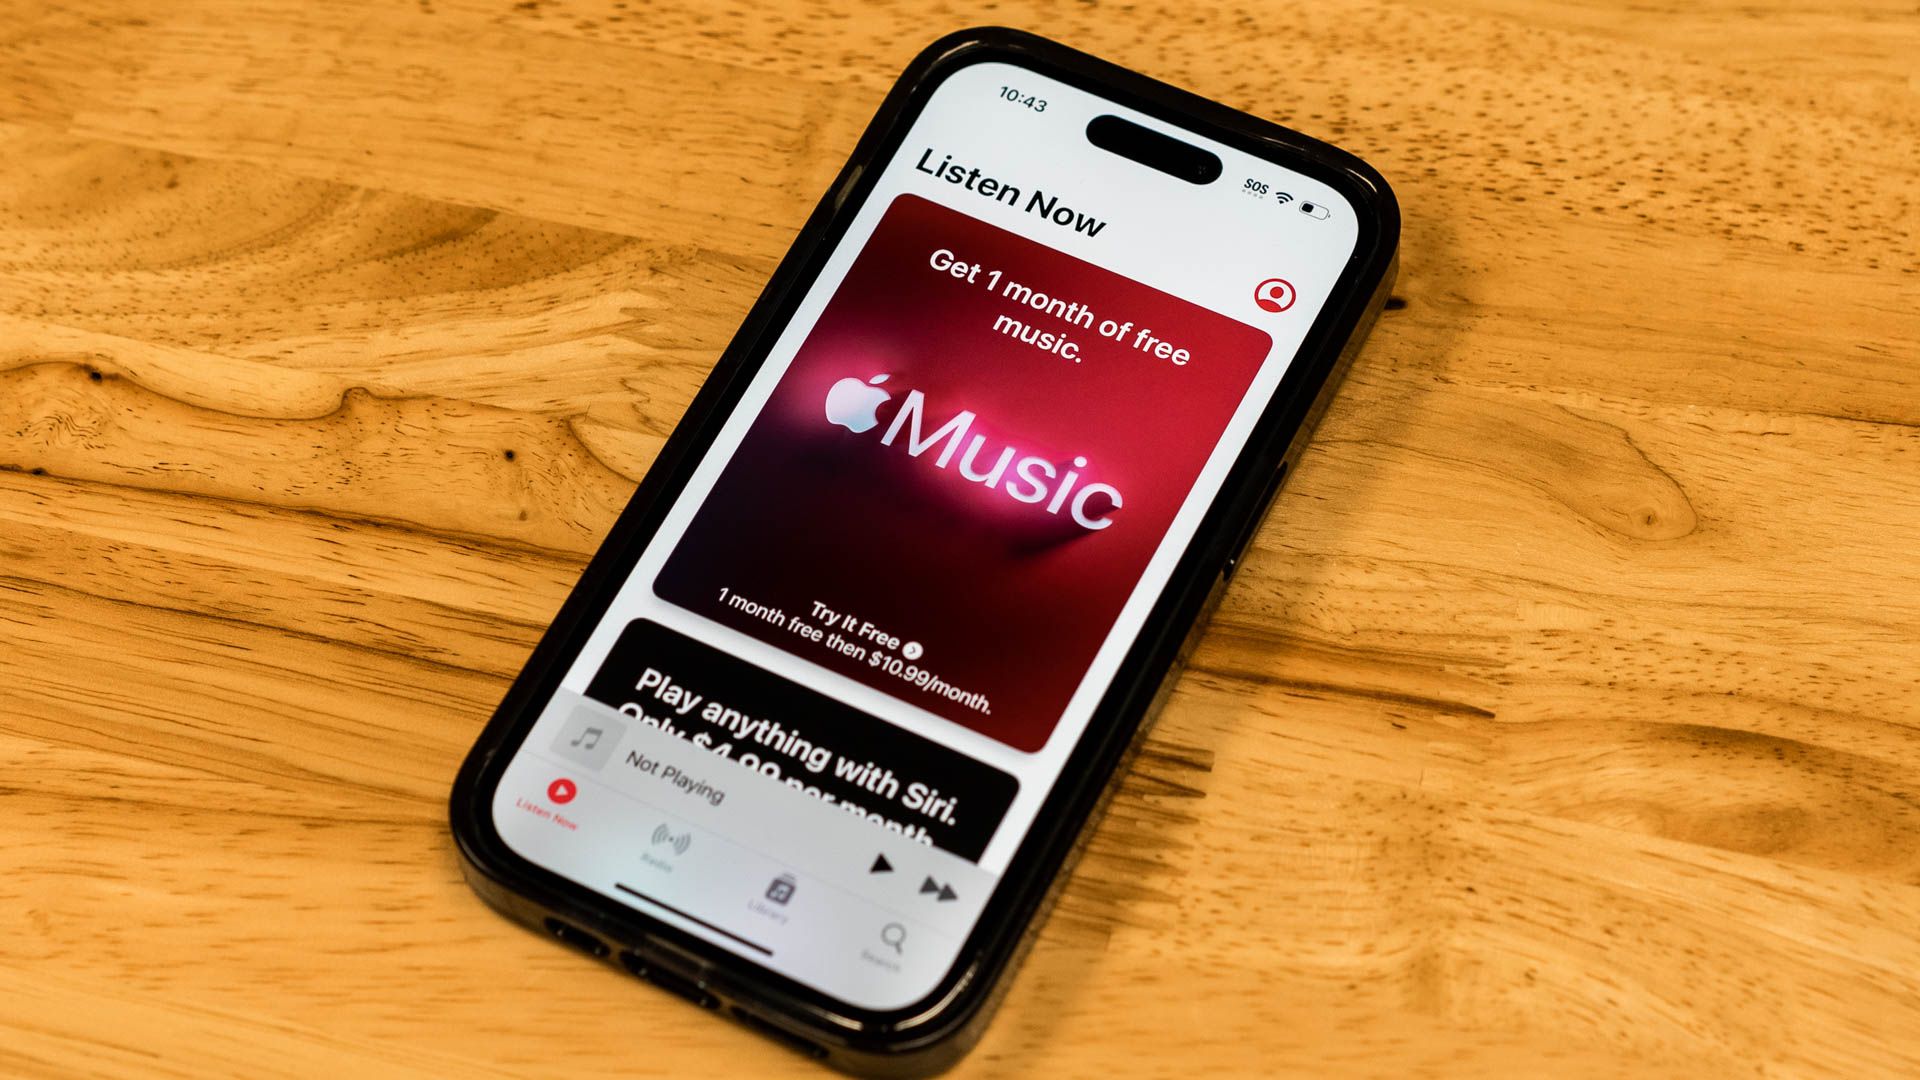 Apple music open on an iPhone